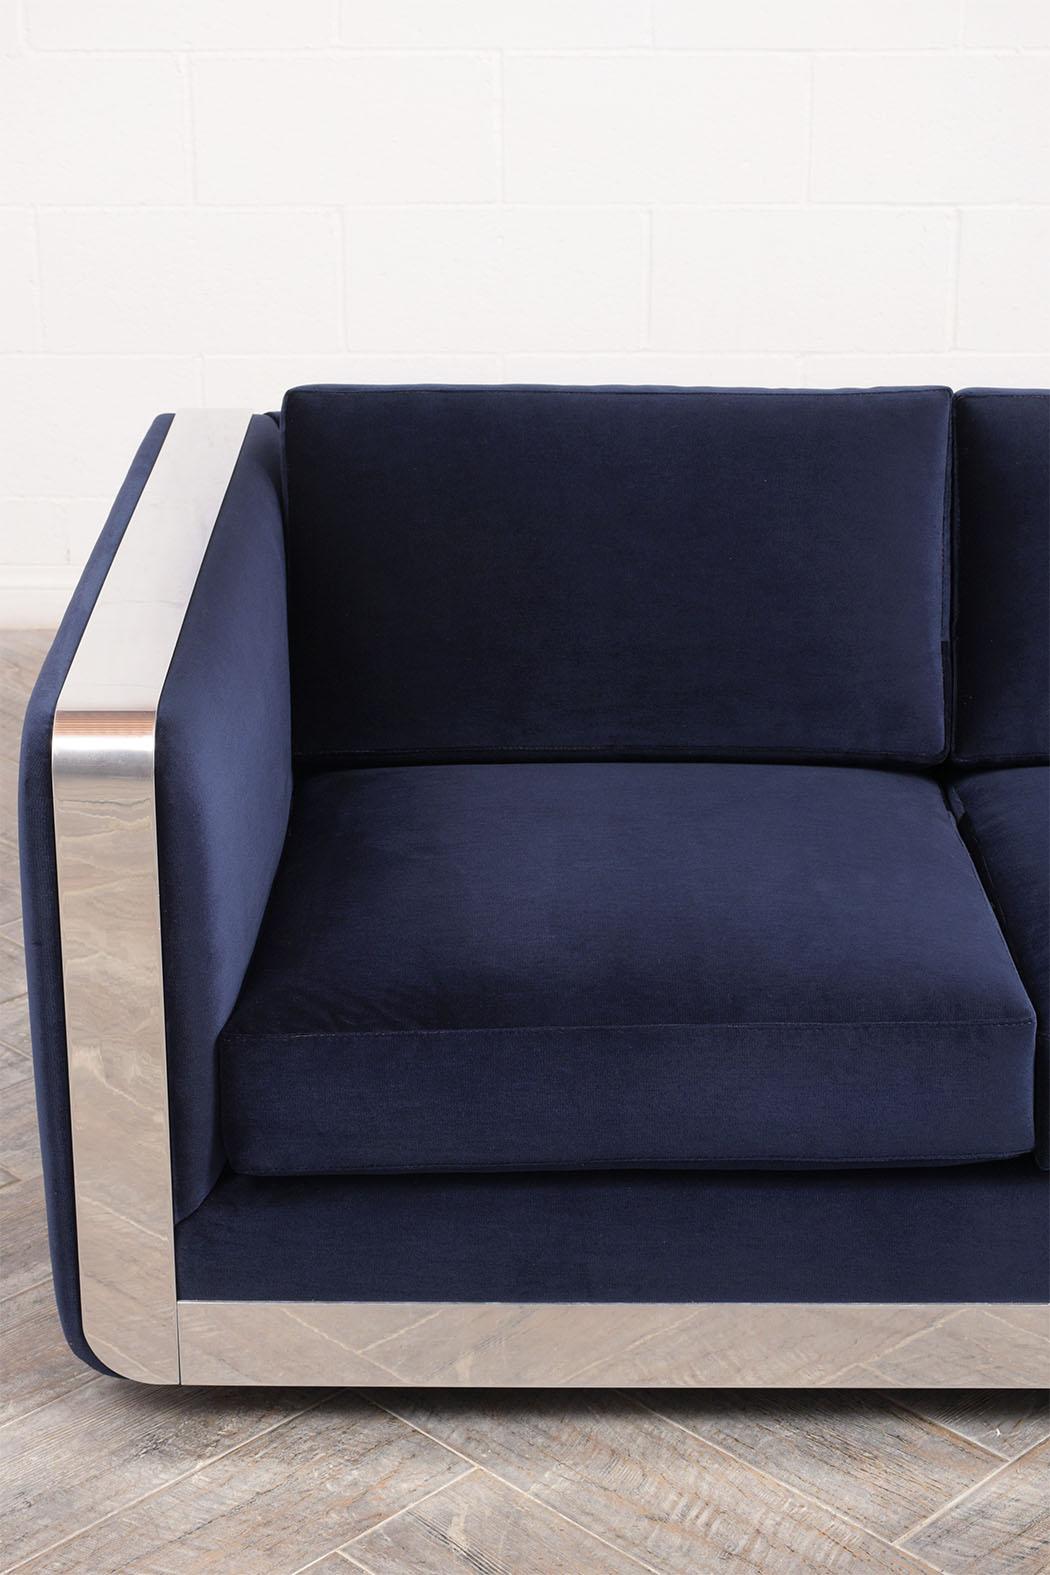 Plated Milo Baughman Style Velvet Sofa